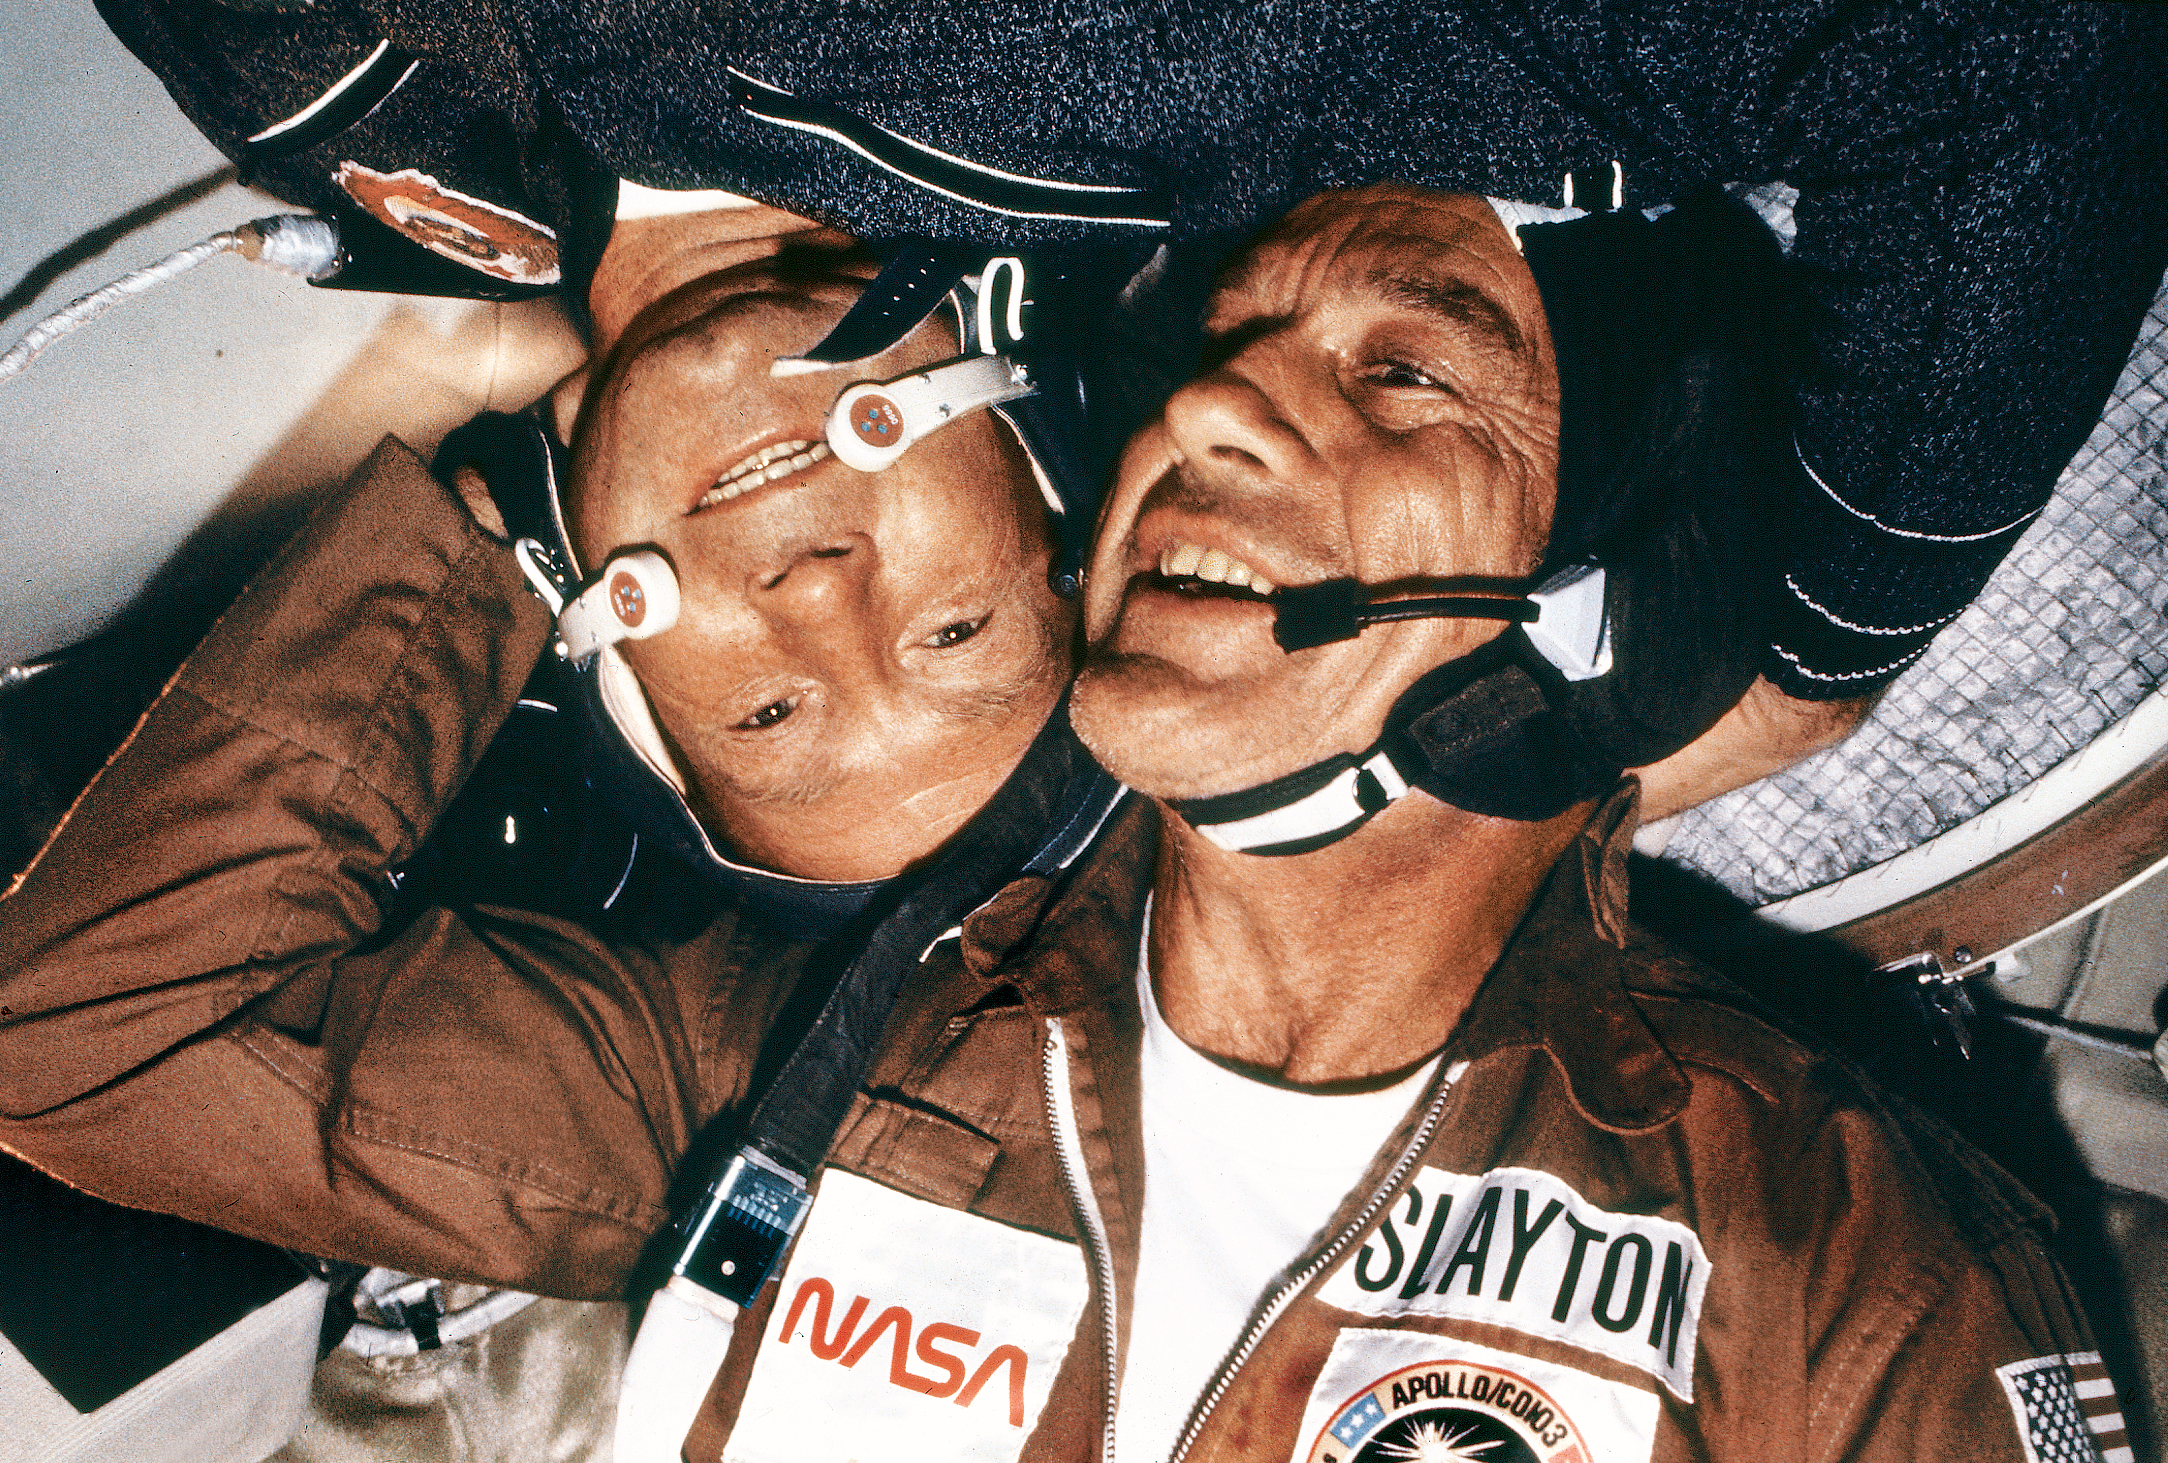 American astronaut Deke Slayton and Russian cosmonaut Alexei Leonov during the US-Soviet Apollo-Soyuz linkup. (NASA)